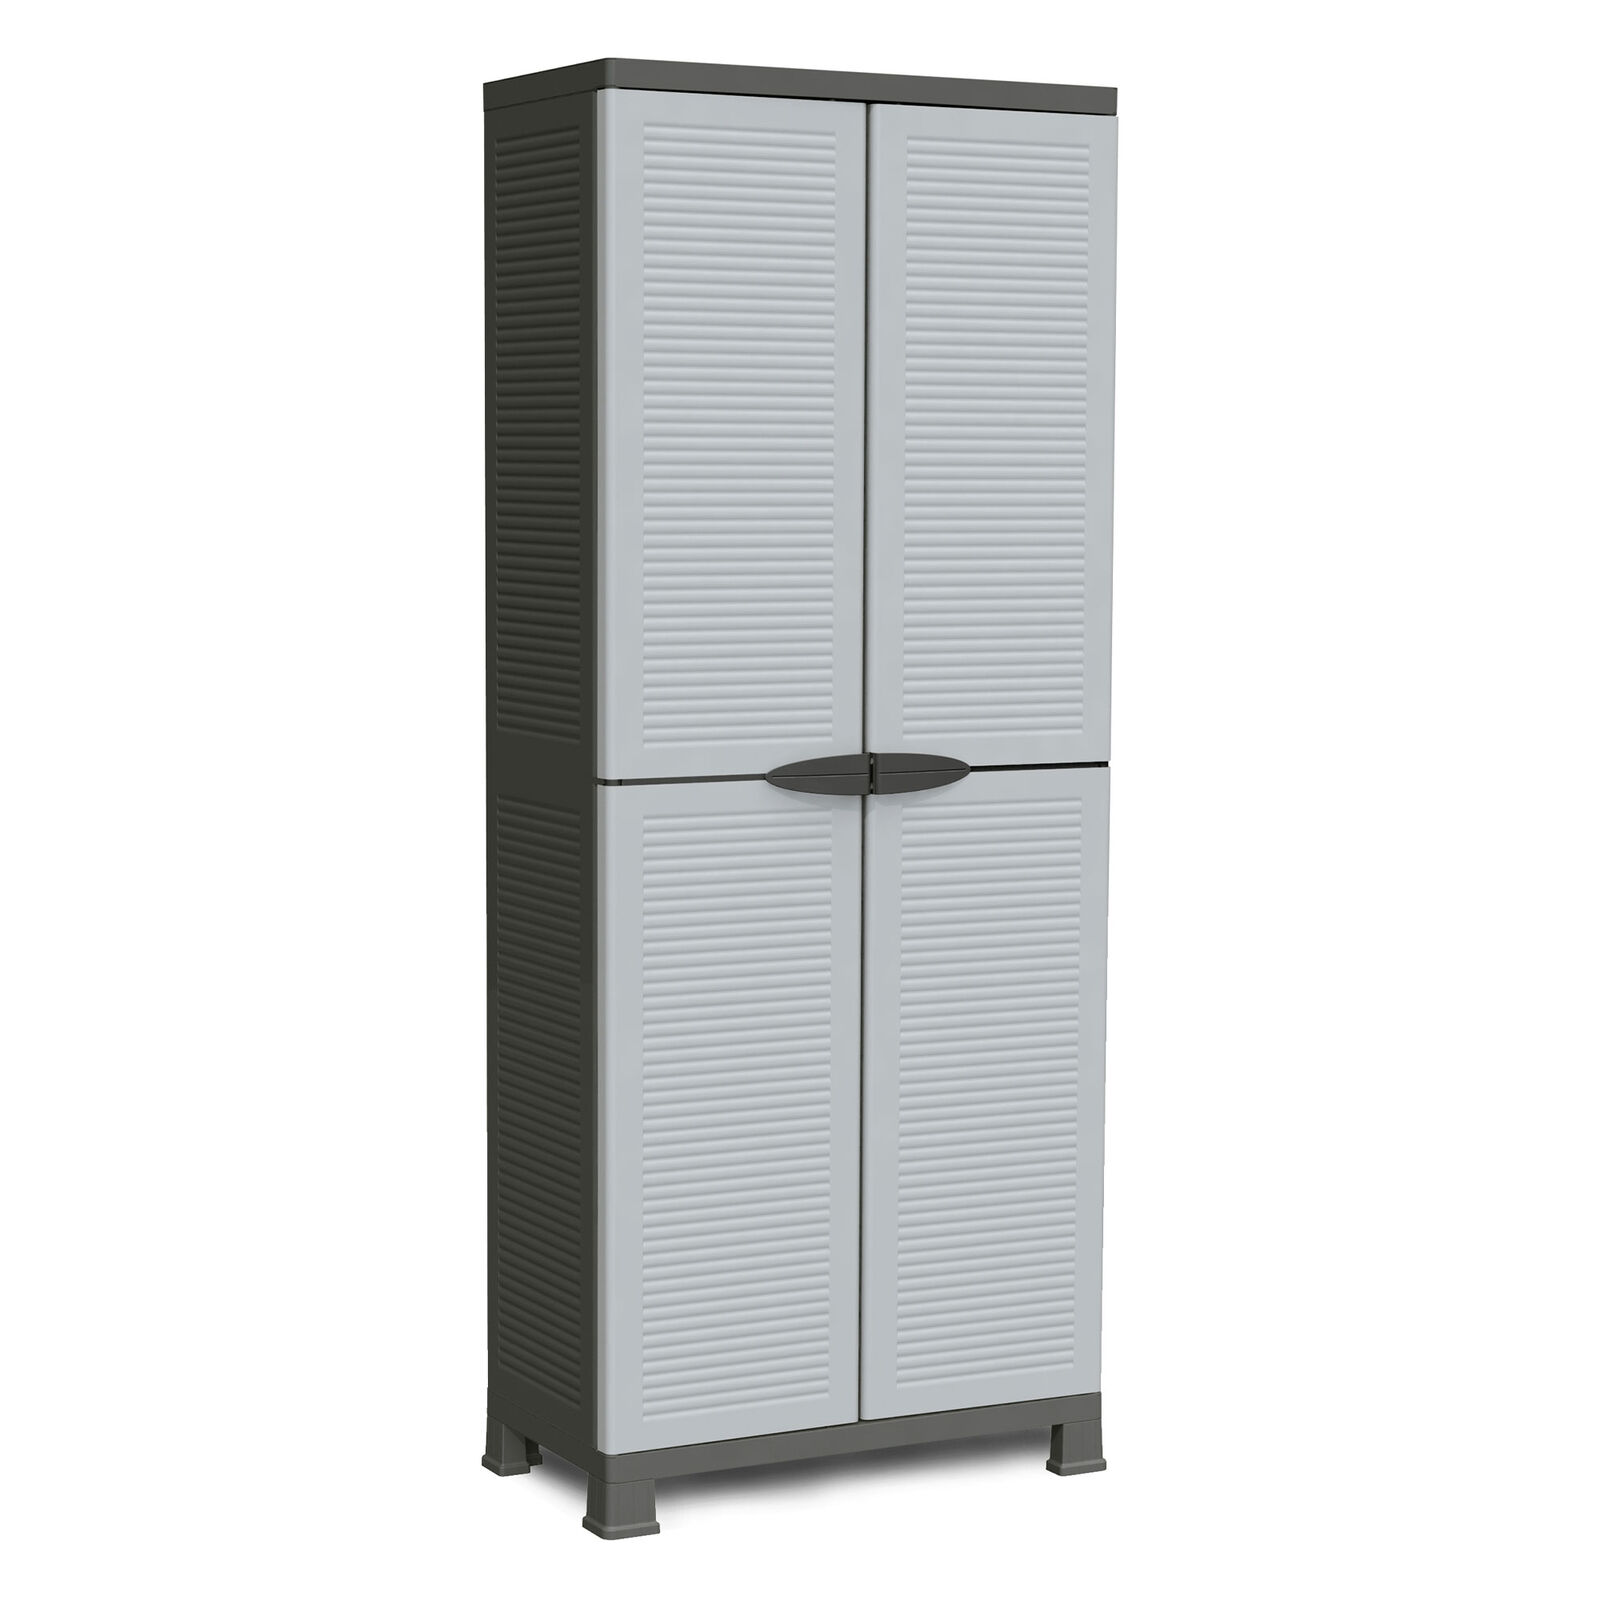 RAM Quality Products PRESTIGE 4 Shelf Adjustable Storage Utility Cabinet, Gray